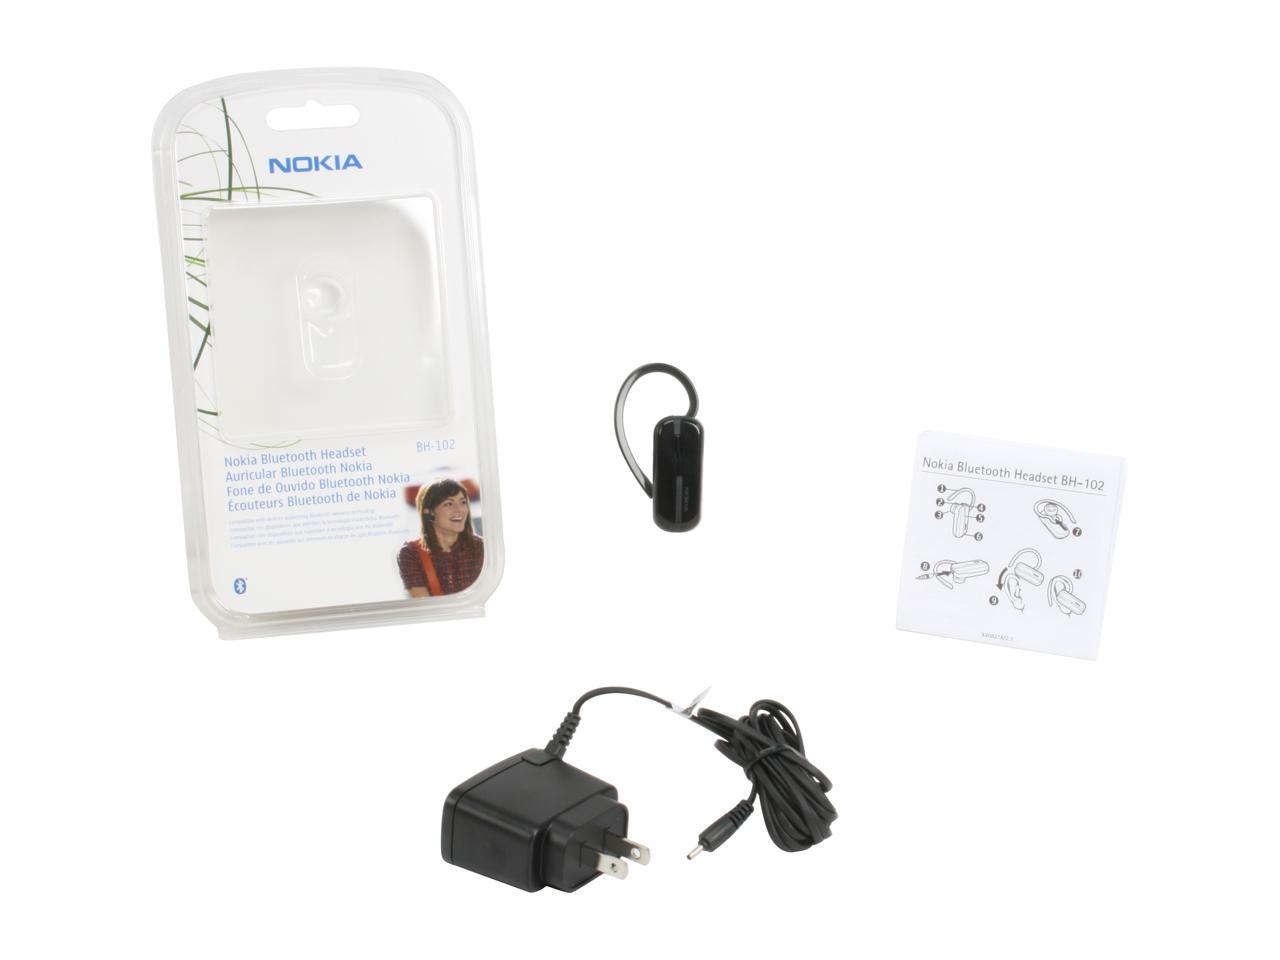 Anesthesie Bedachtzaam huurling NOKIA BH-102 Bluetooth Headset - Newegg.com